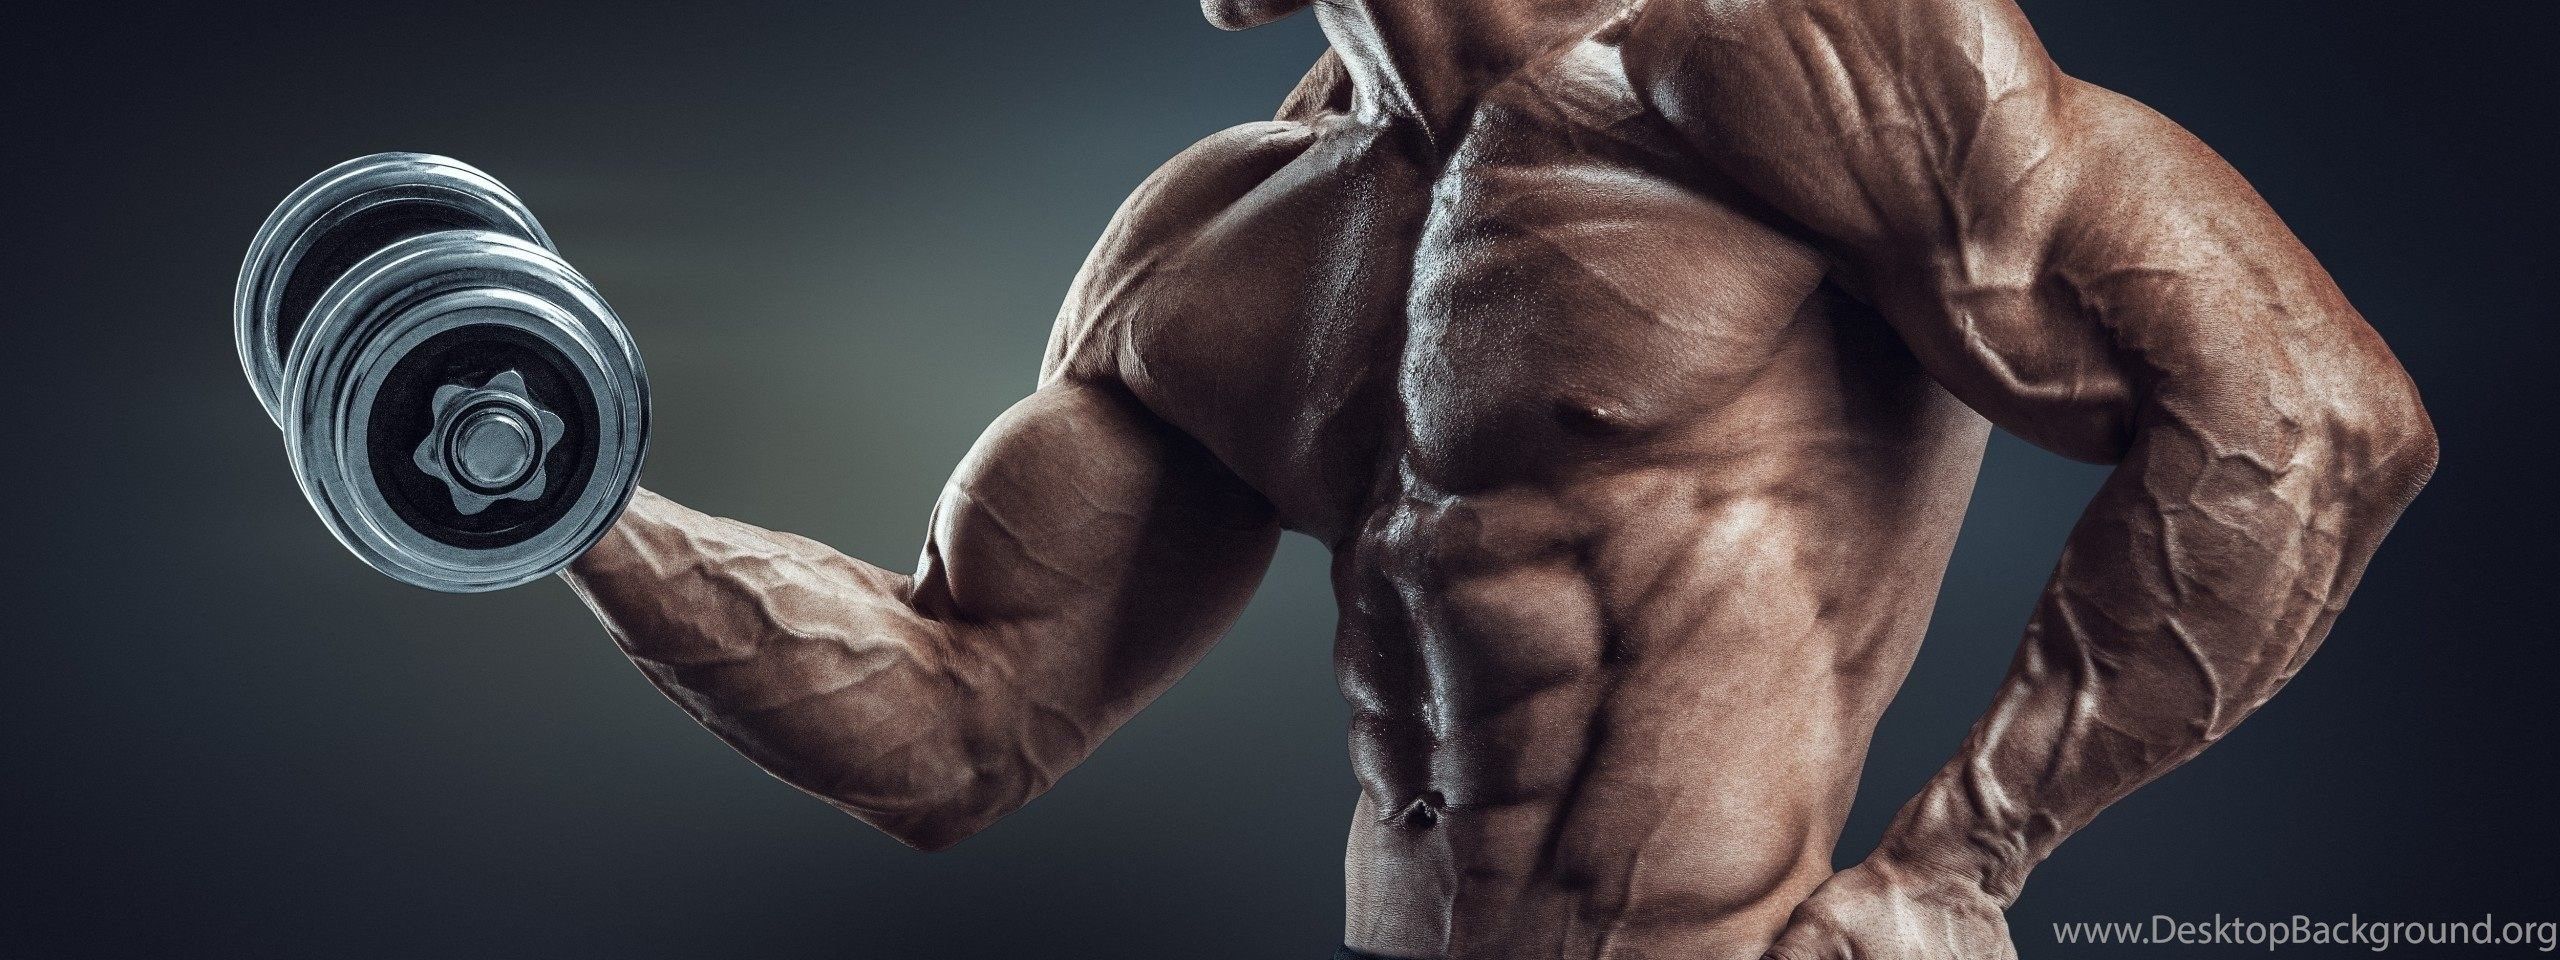 Dumbbell workout to build muscle bodybuilder Desktop